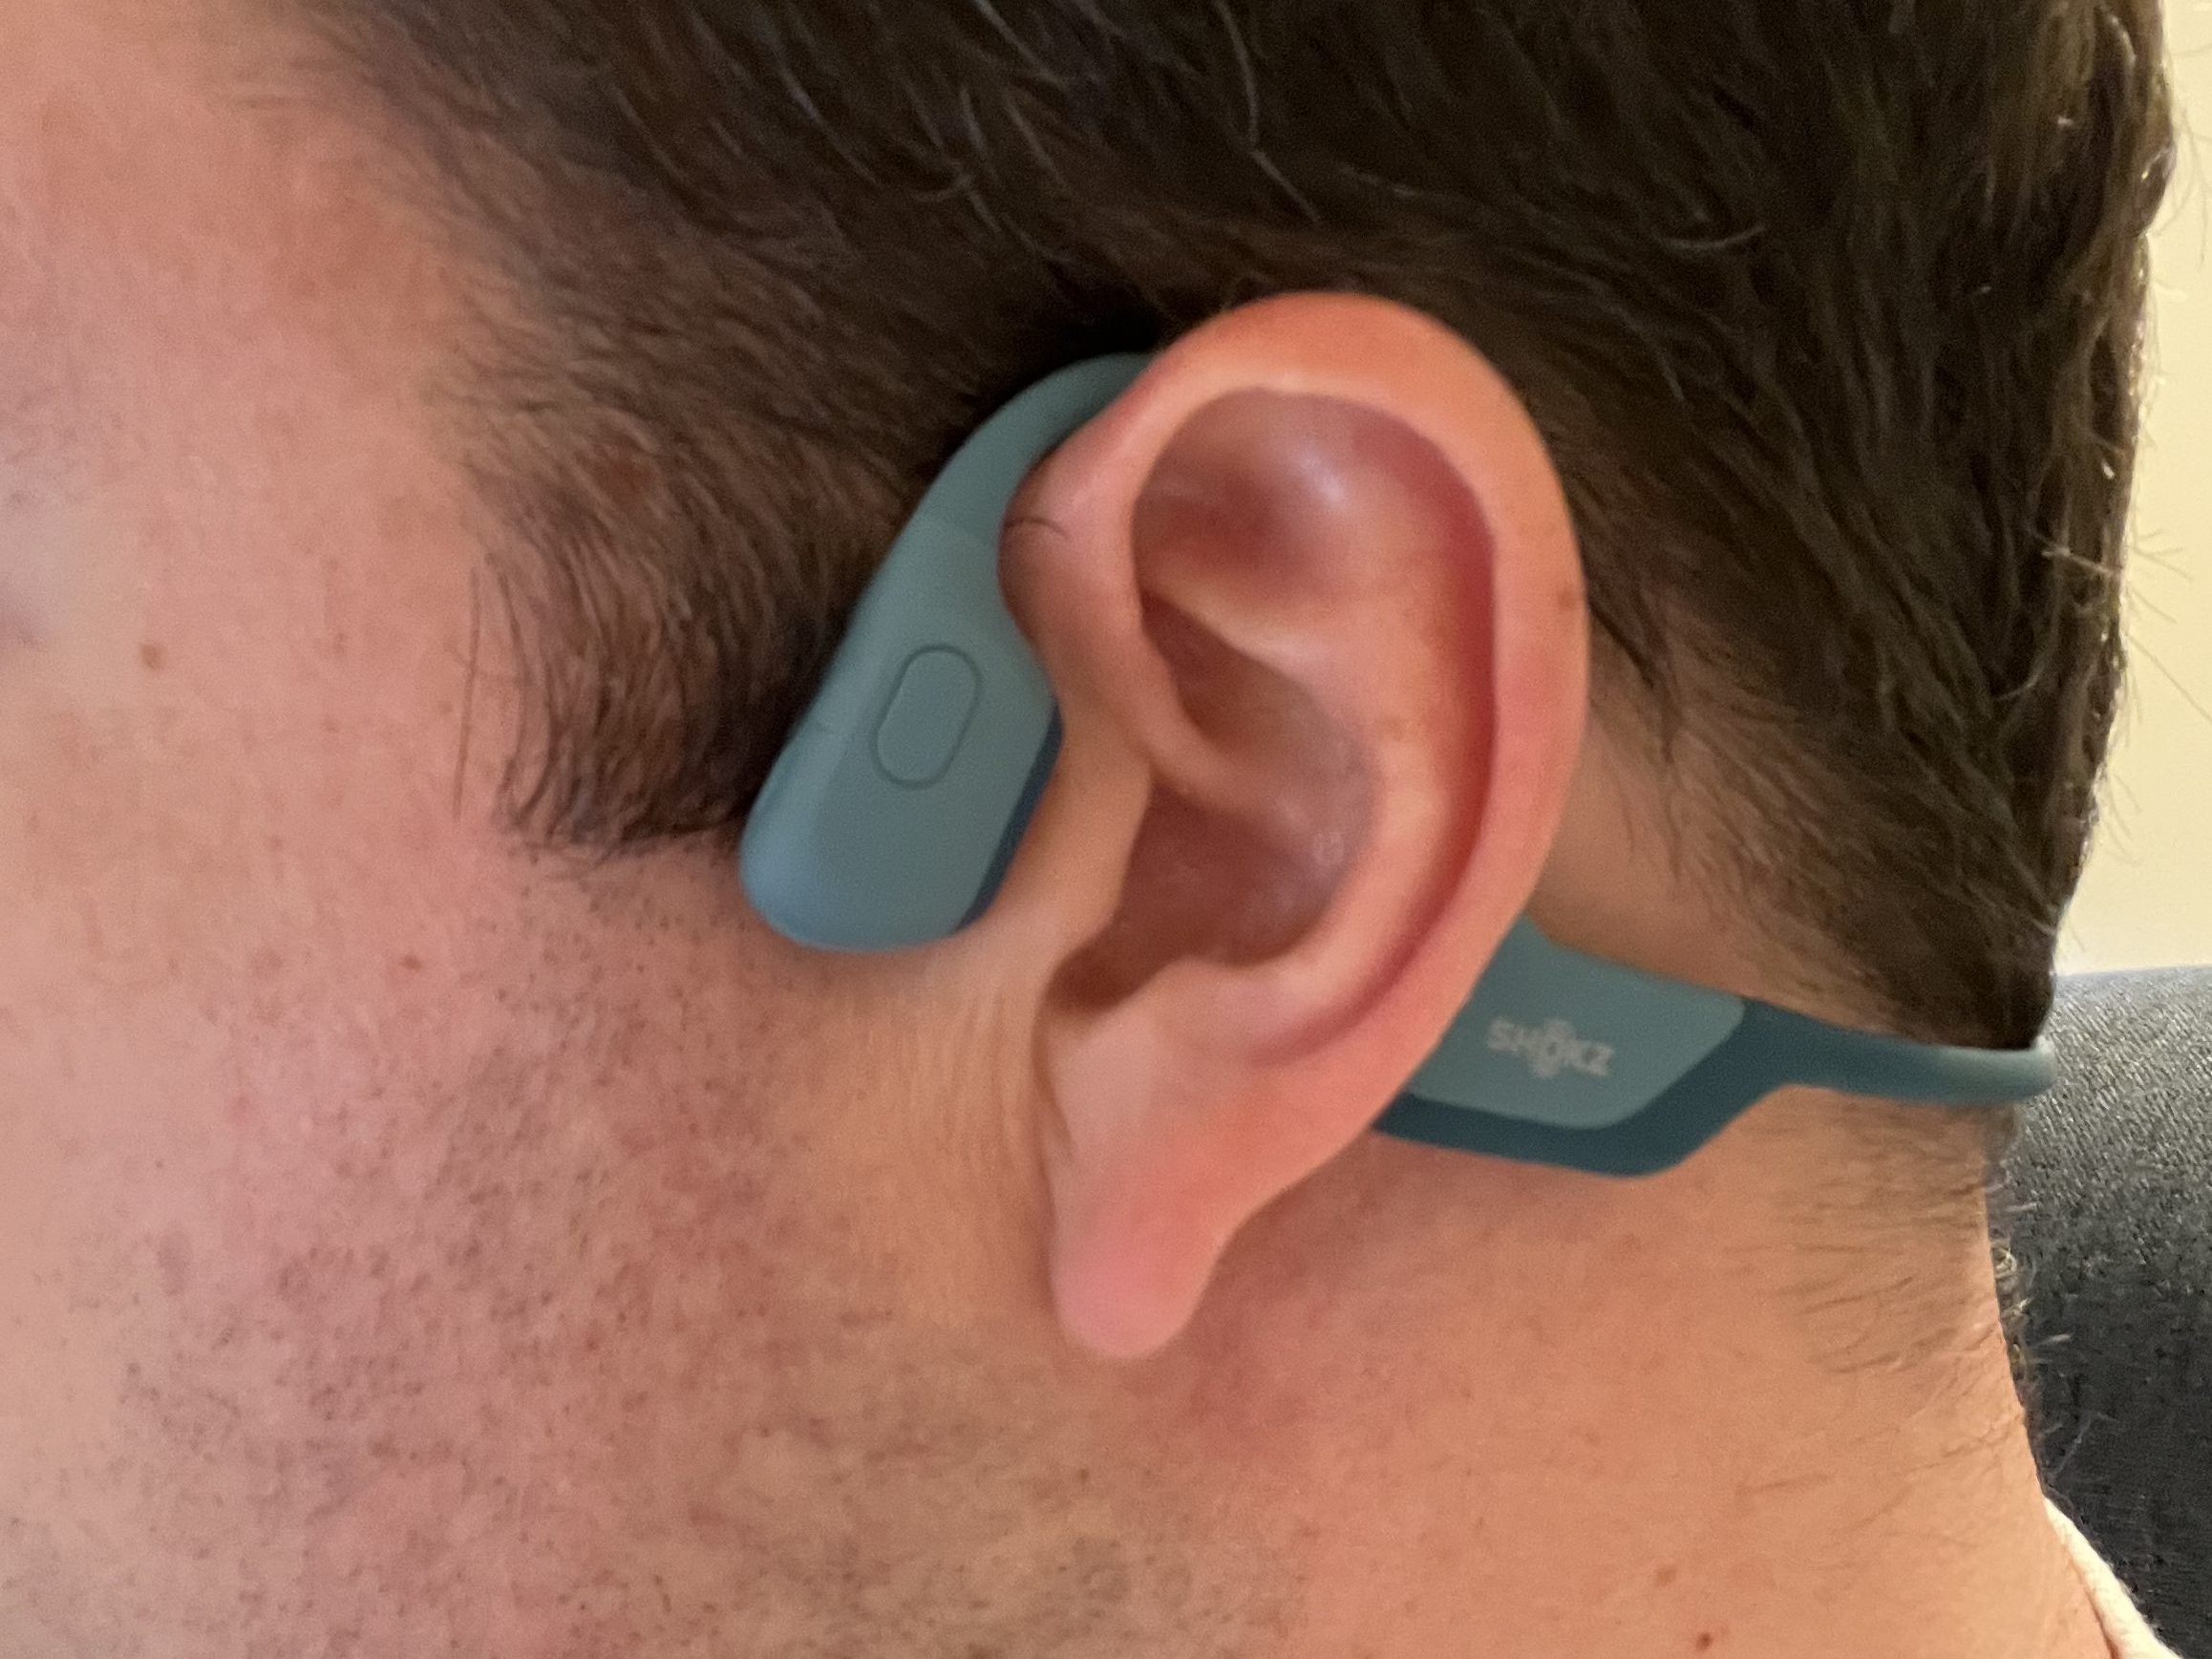 7 bone conduction headphones for a sonorous sound